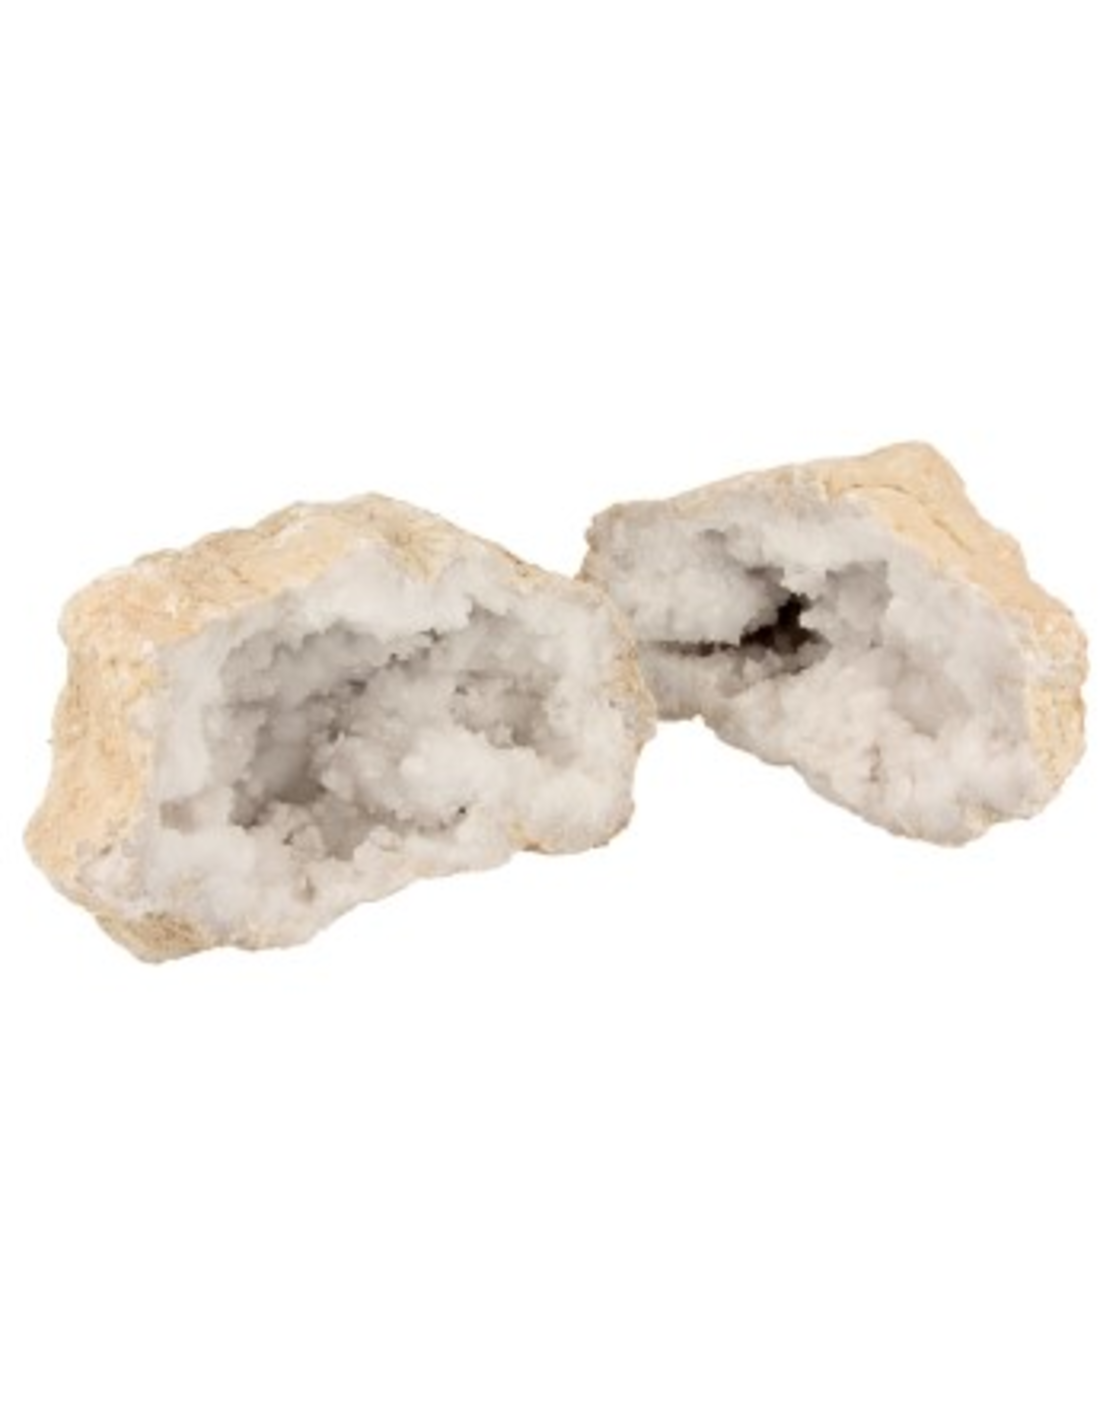 Bergkristal geode paar 16-20 cm